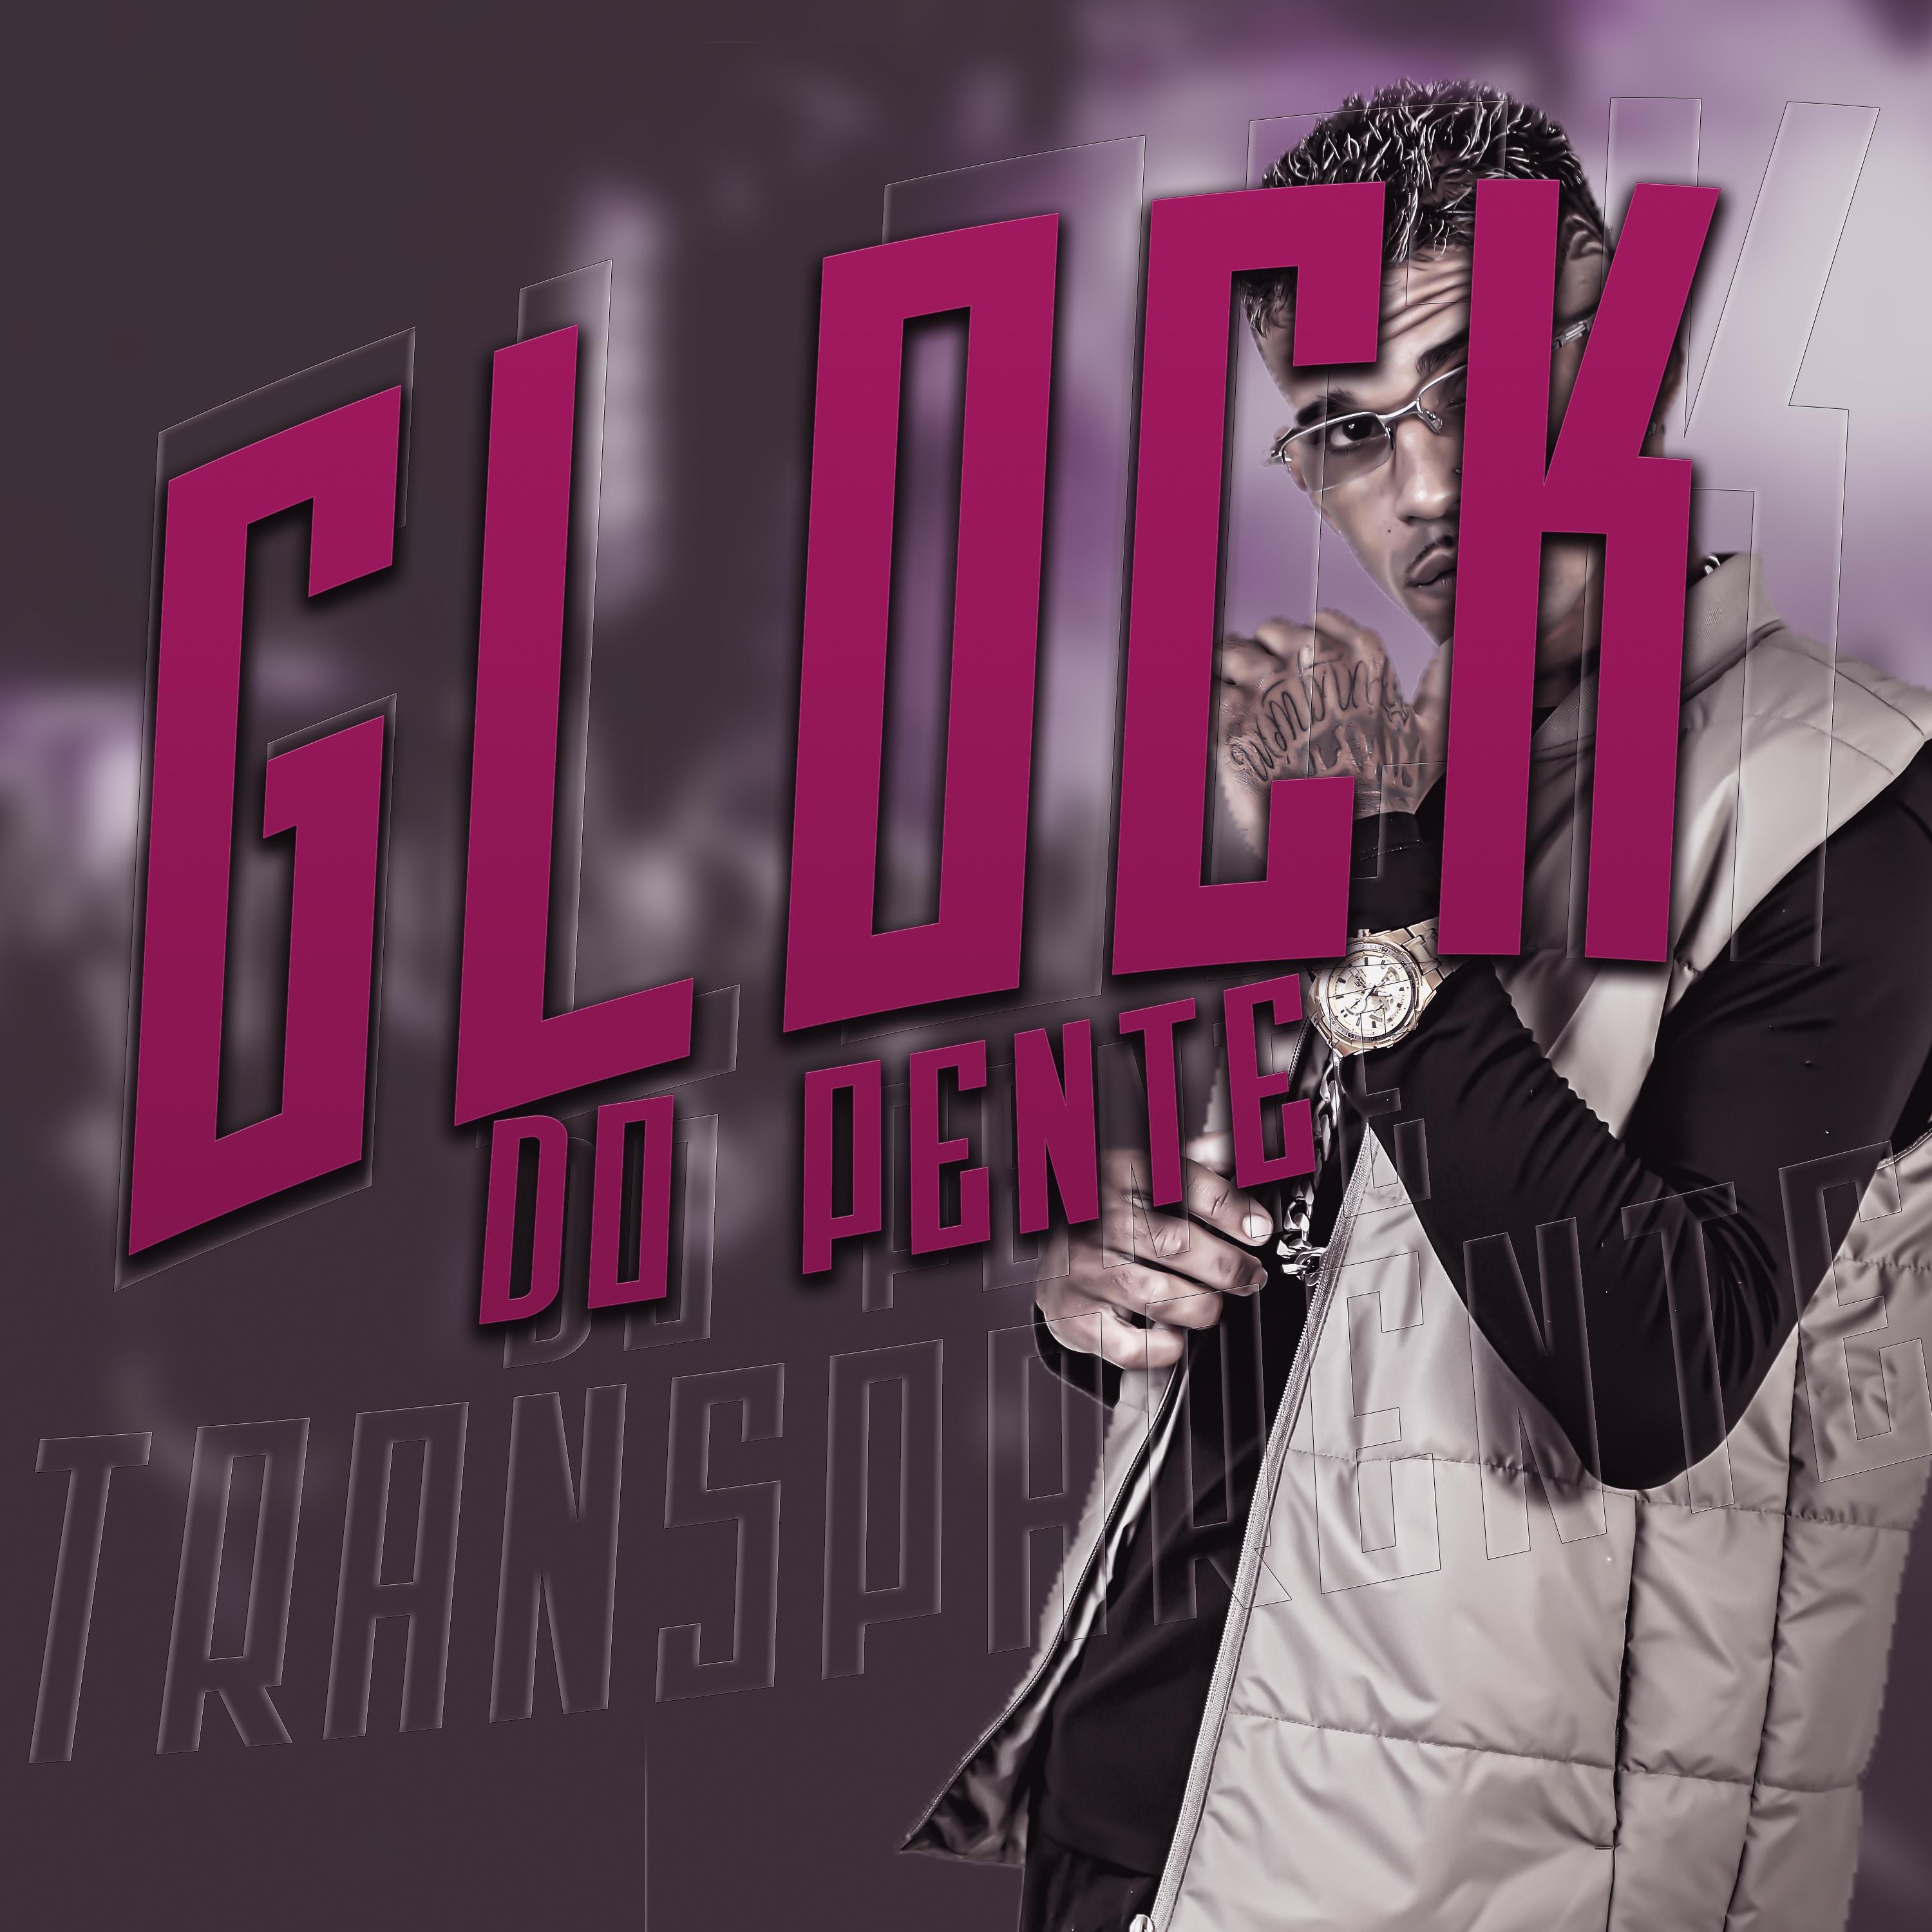 Постер альбома Glock do Pente Transparente